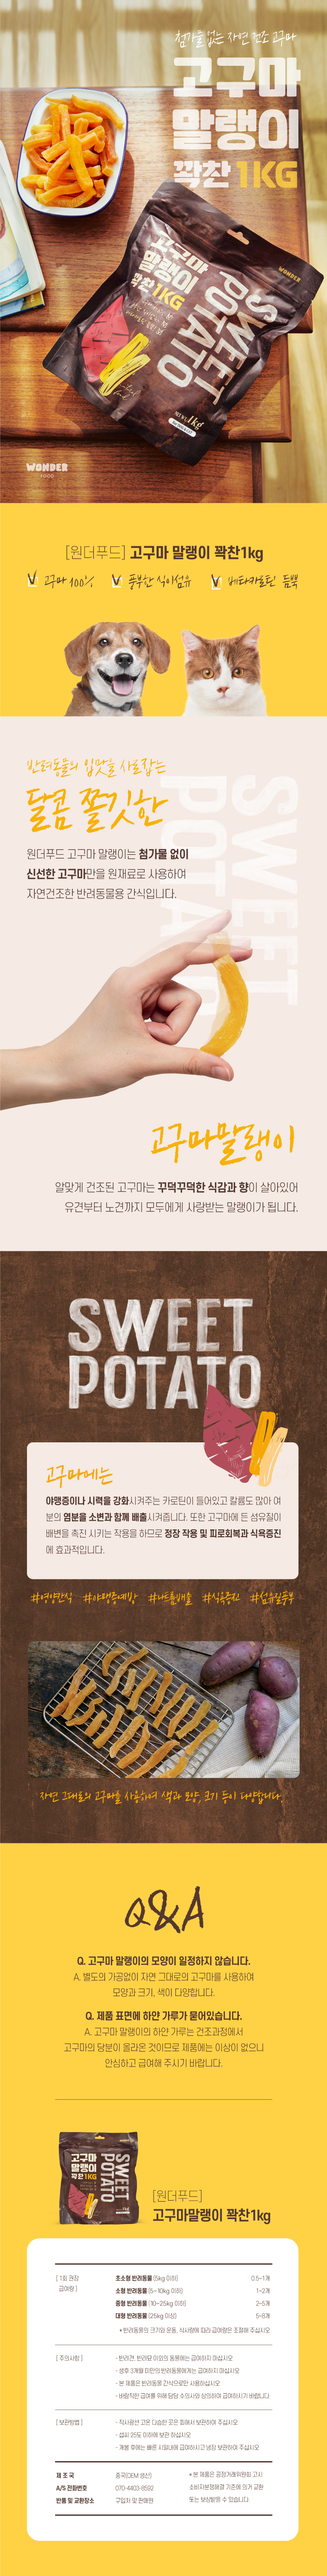 wonderfood_sweetpotato_800_155229.jpg